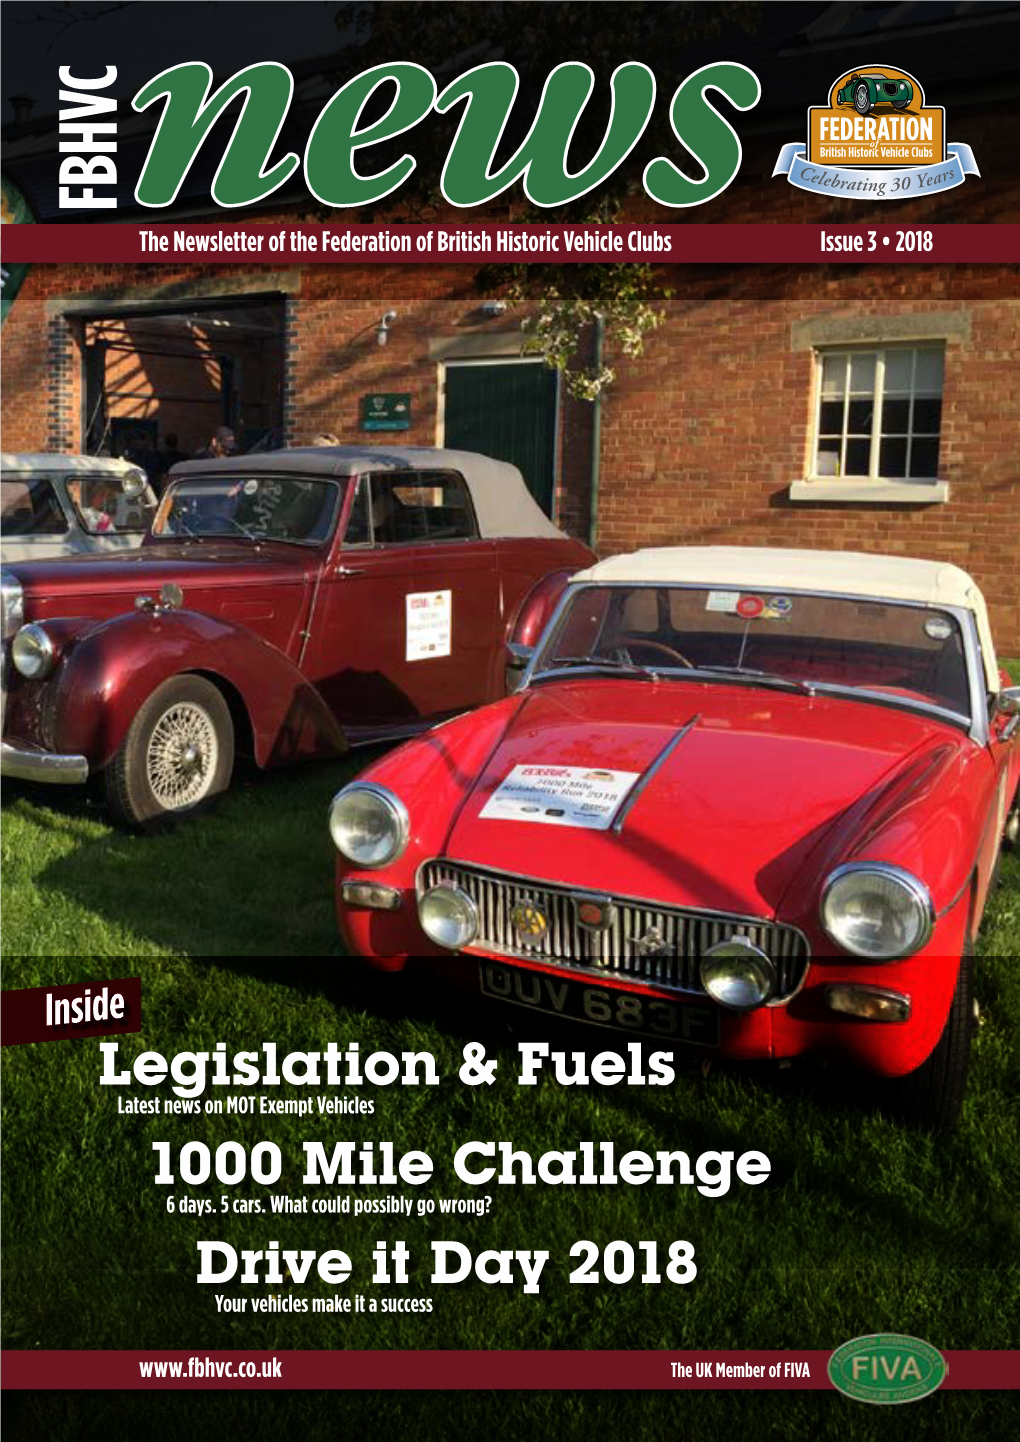 Legislation & Fuels 1000 Mile Challenge Drive It Day 2018